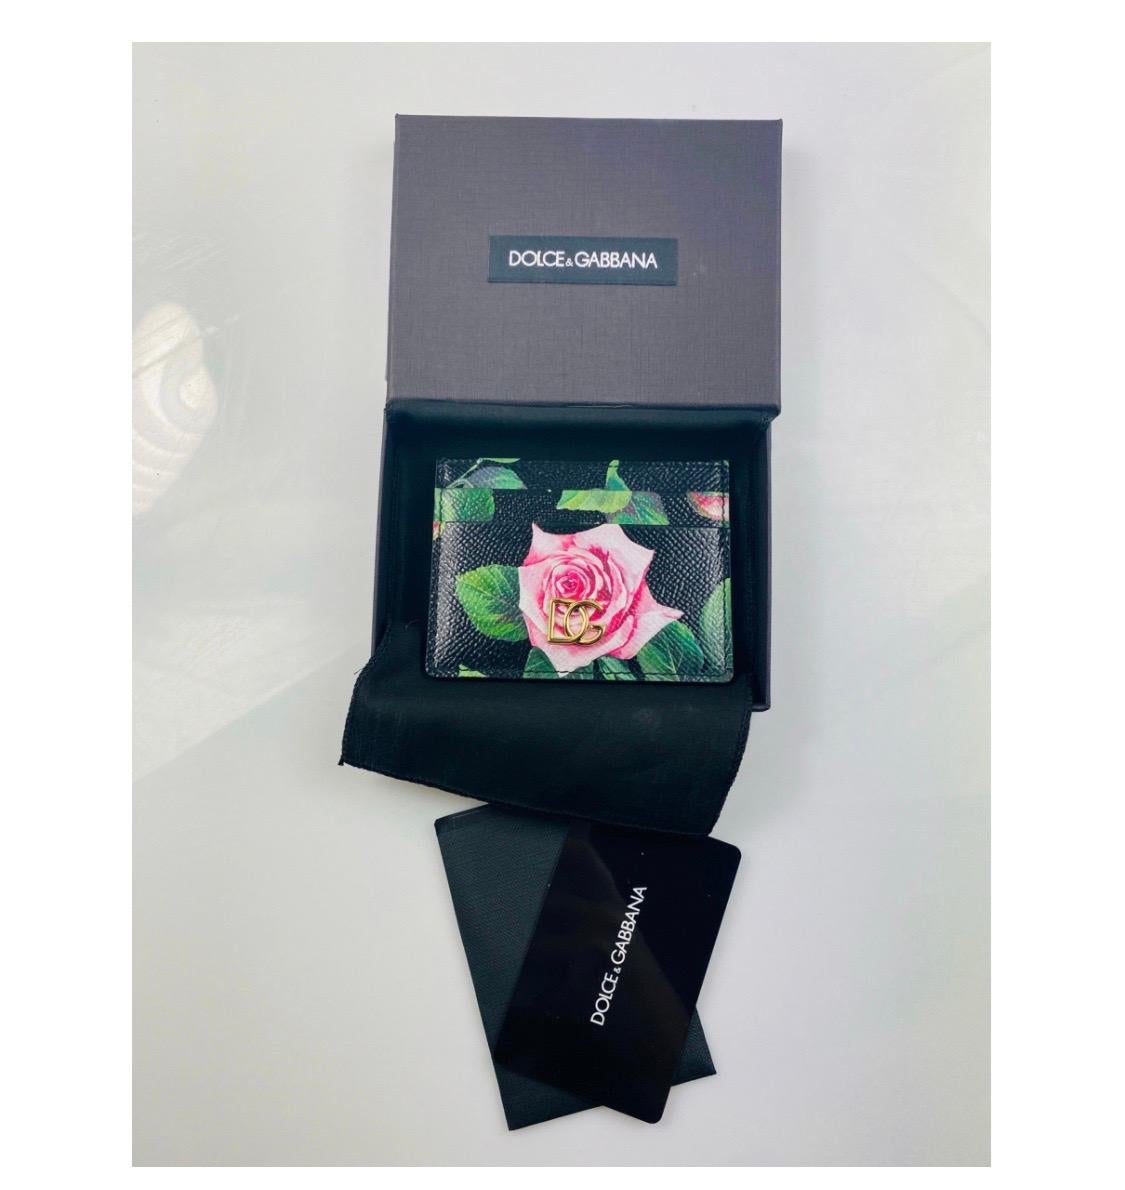 Black Dolce & Gabbana Tropical Rose
printed Vitello leather cardholder